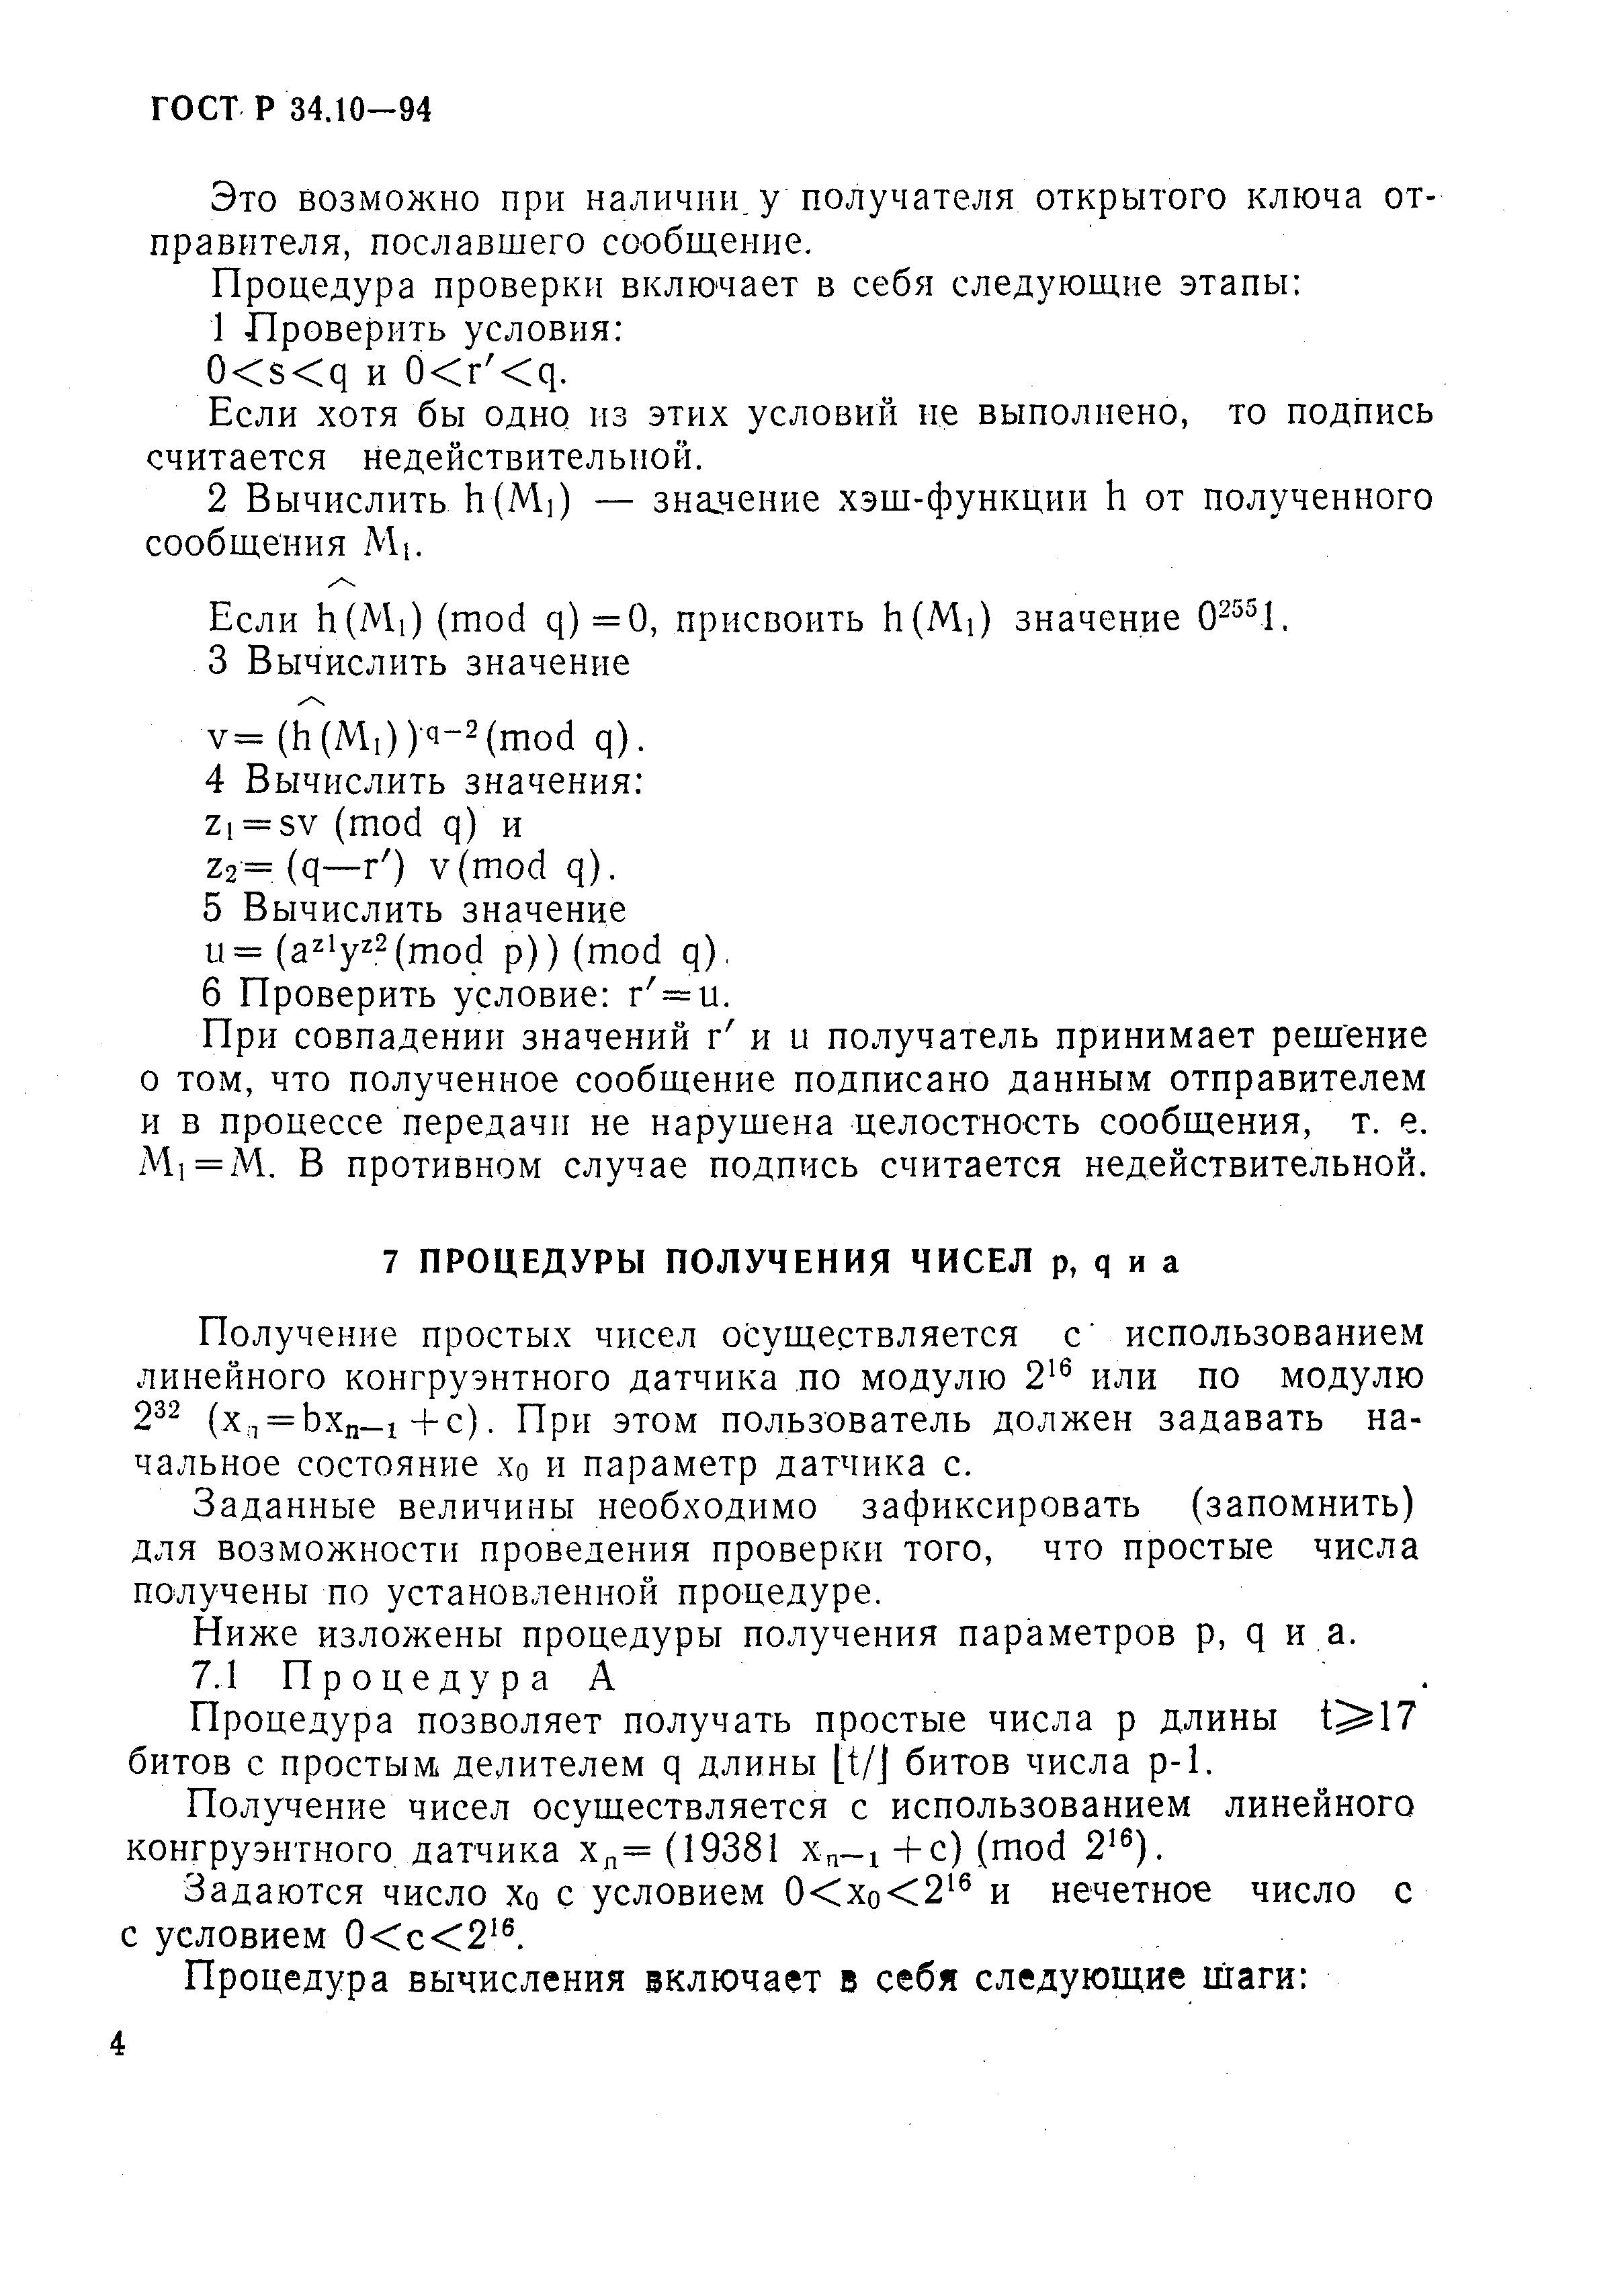 ГОСТ Р 34.10-94